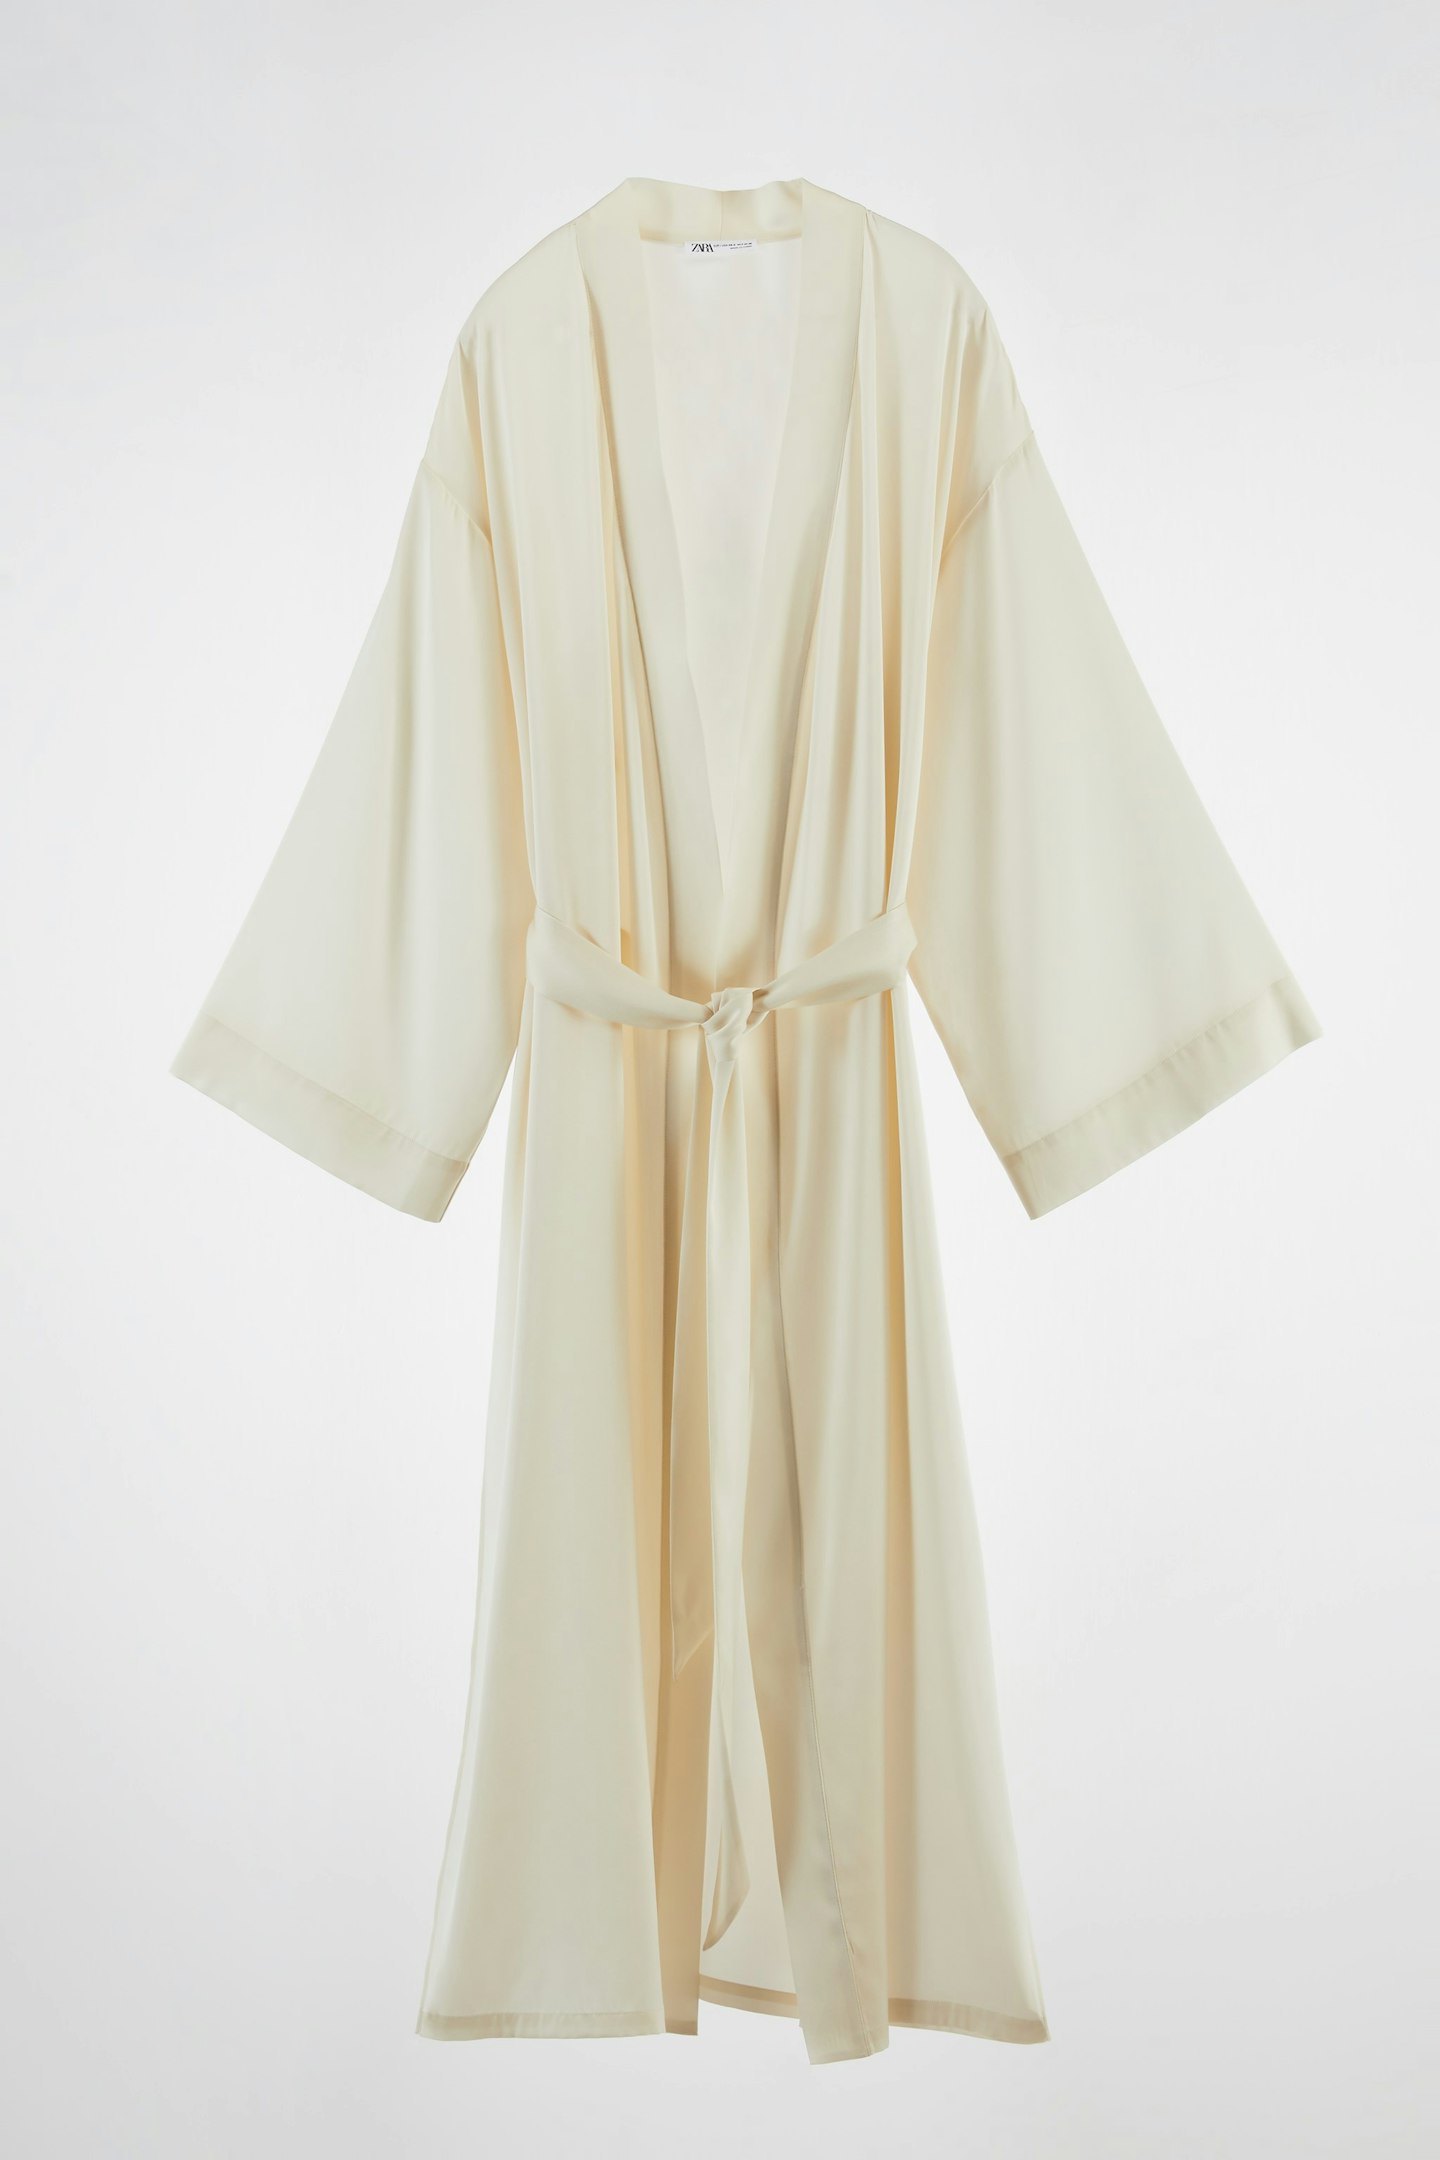 Zara, Silk Dressing Gown, £159